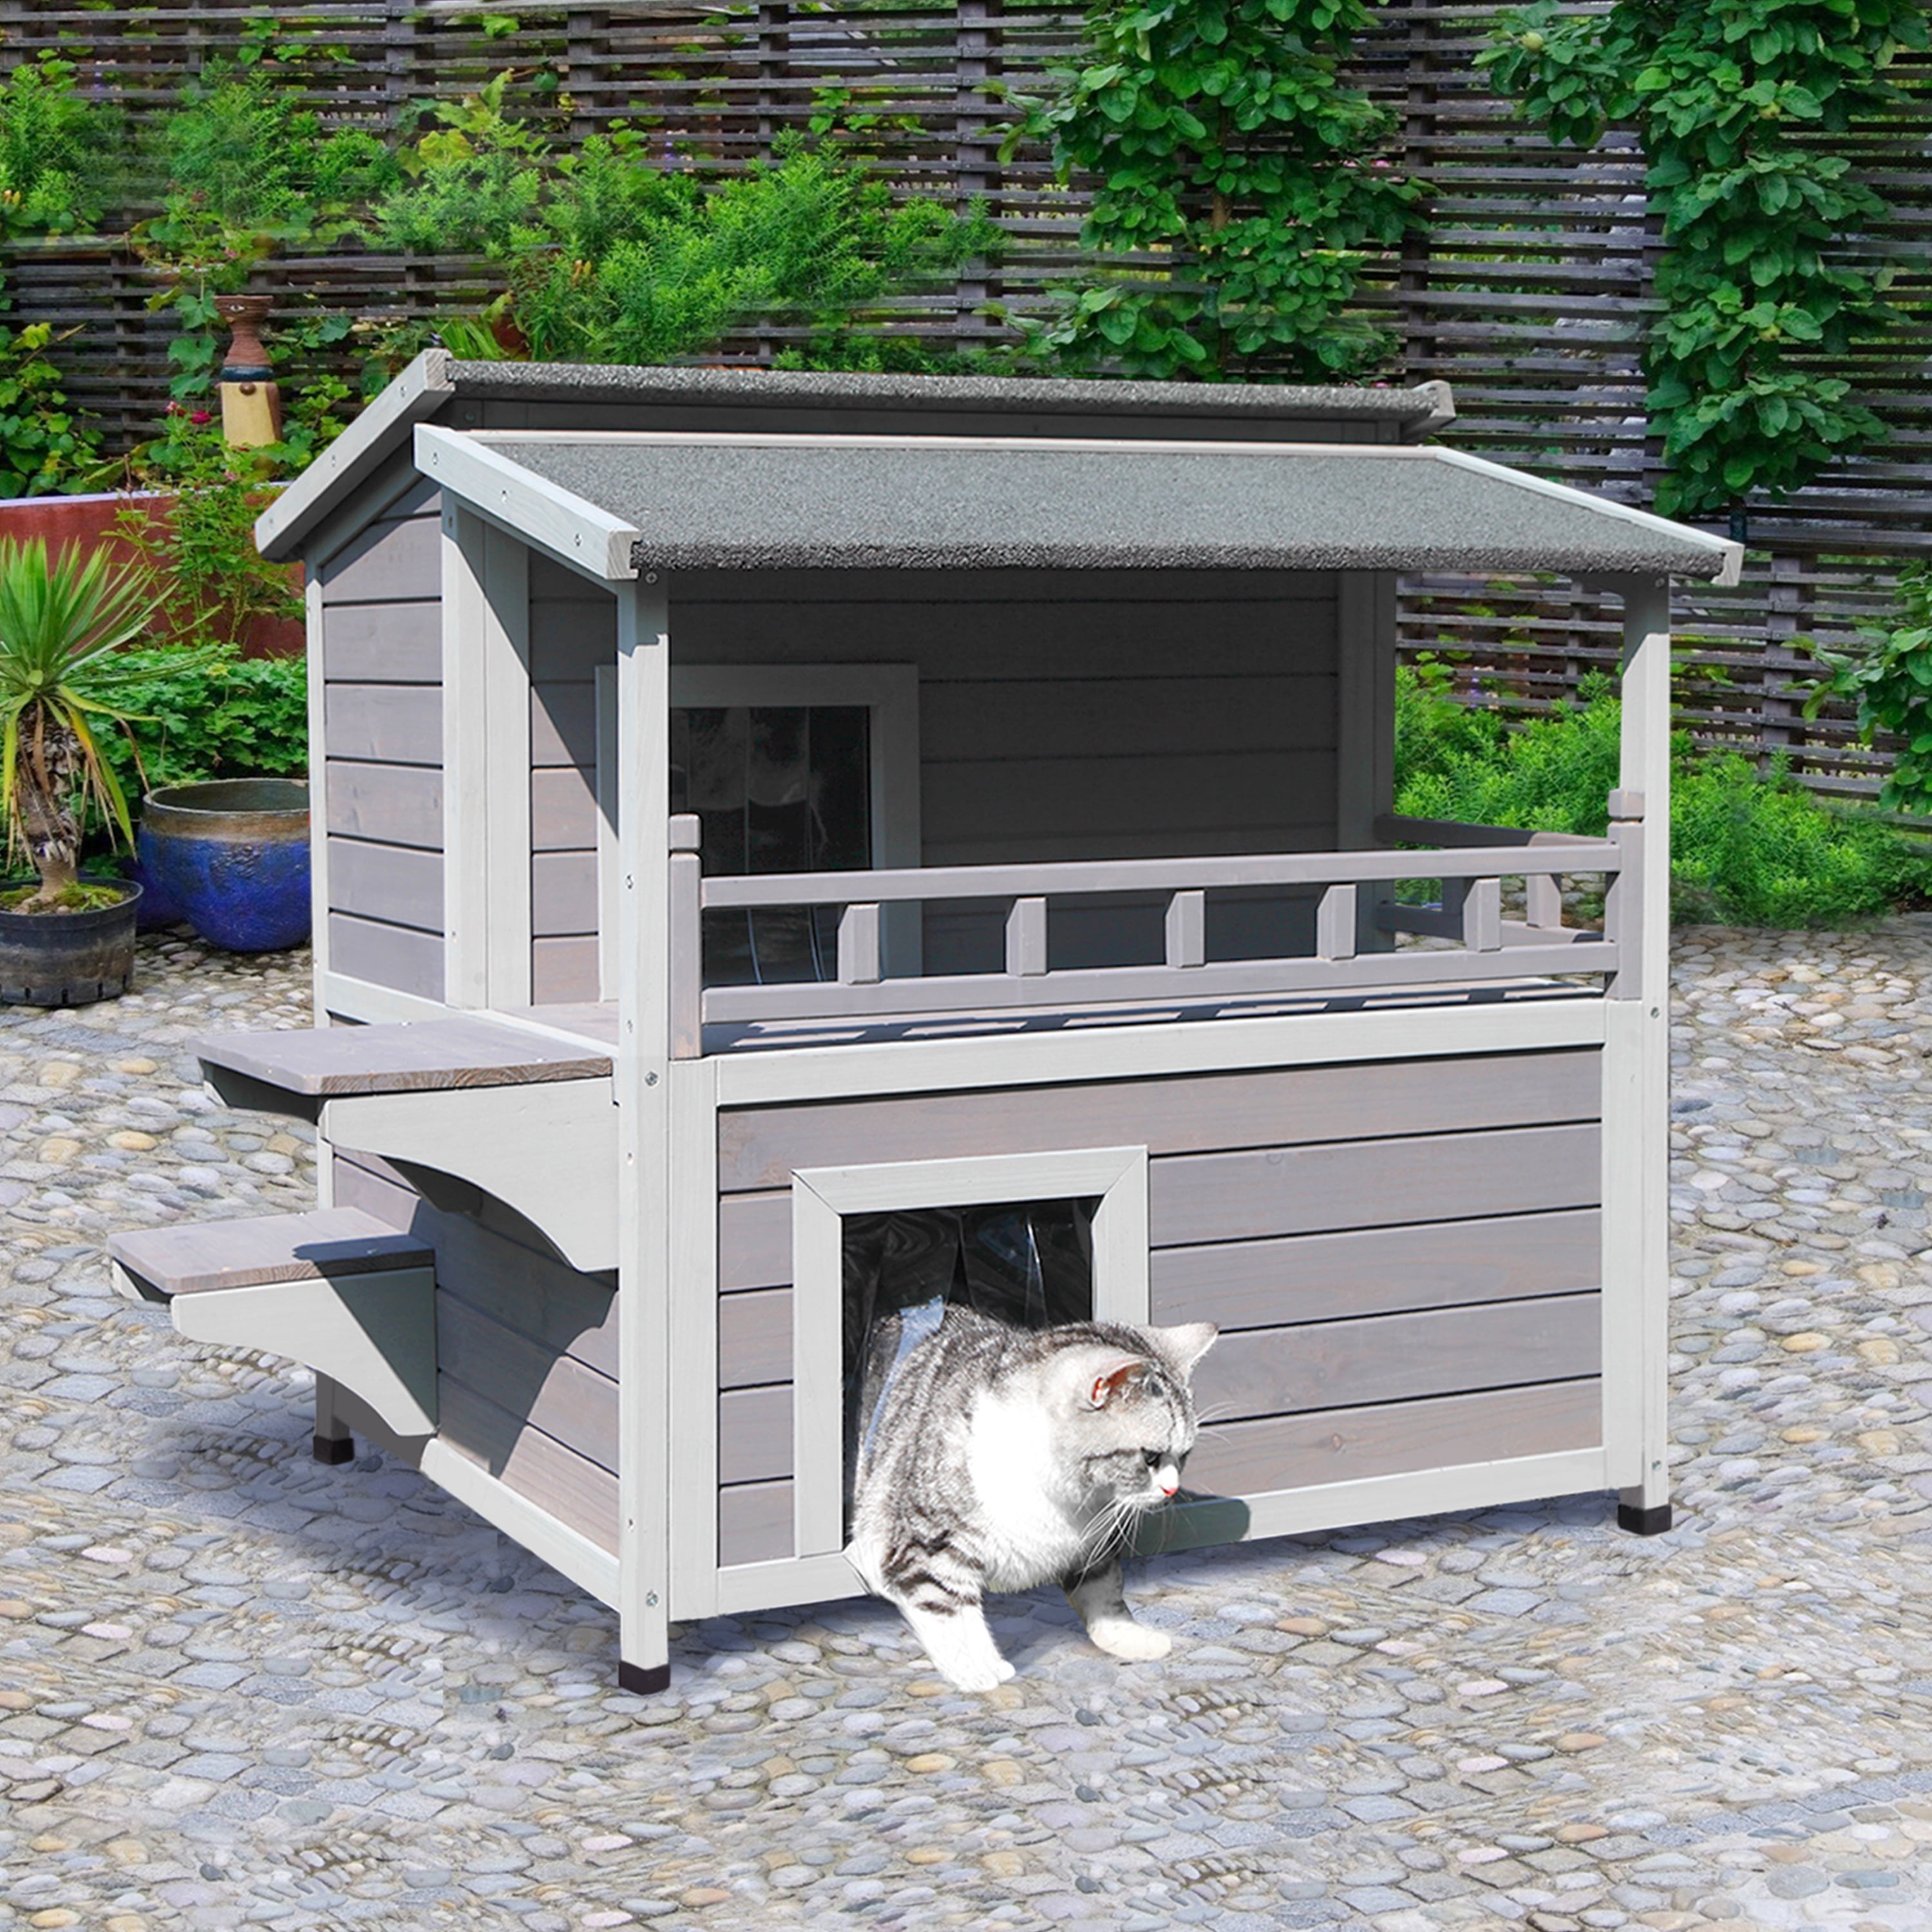 Tangkula Cat House 2 Story Wood Outdoor Weatherproof Pet Kitten Condo Shelter 